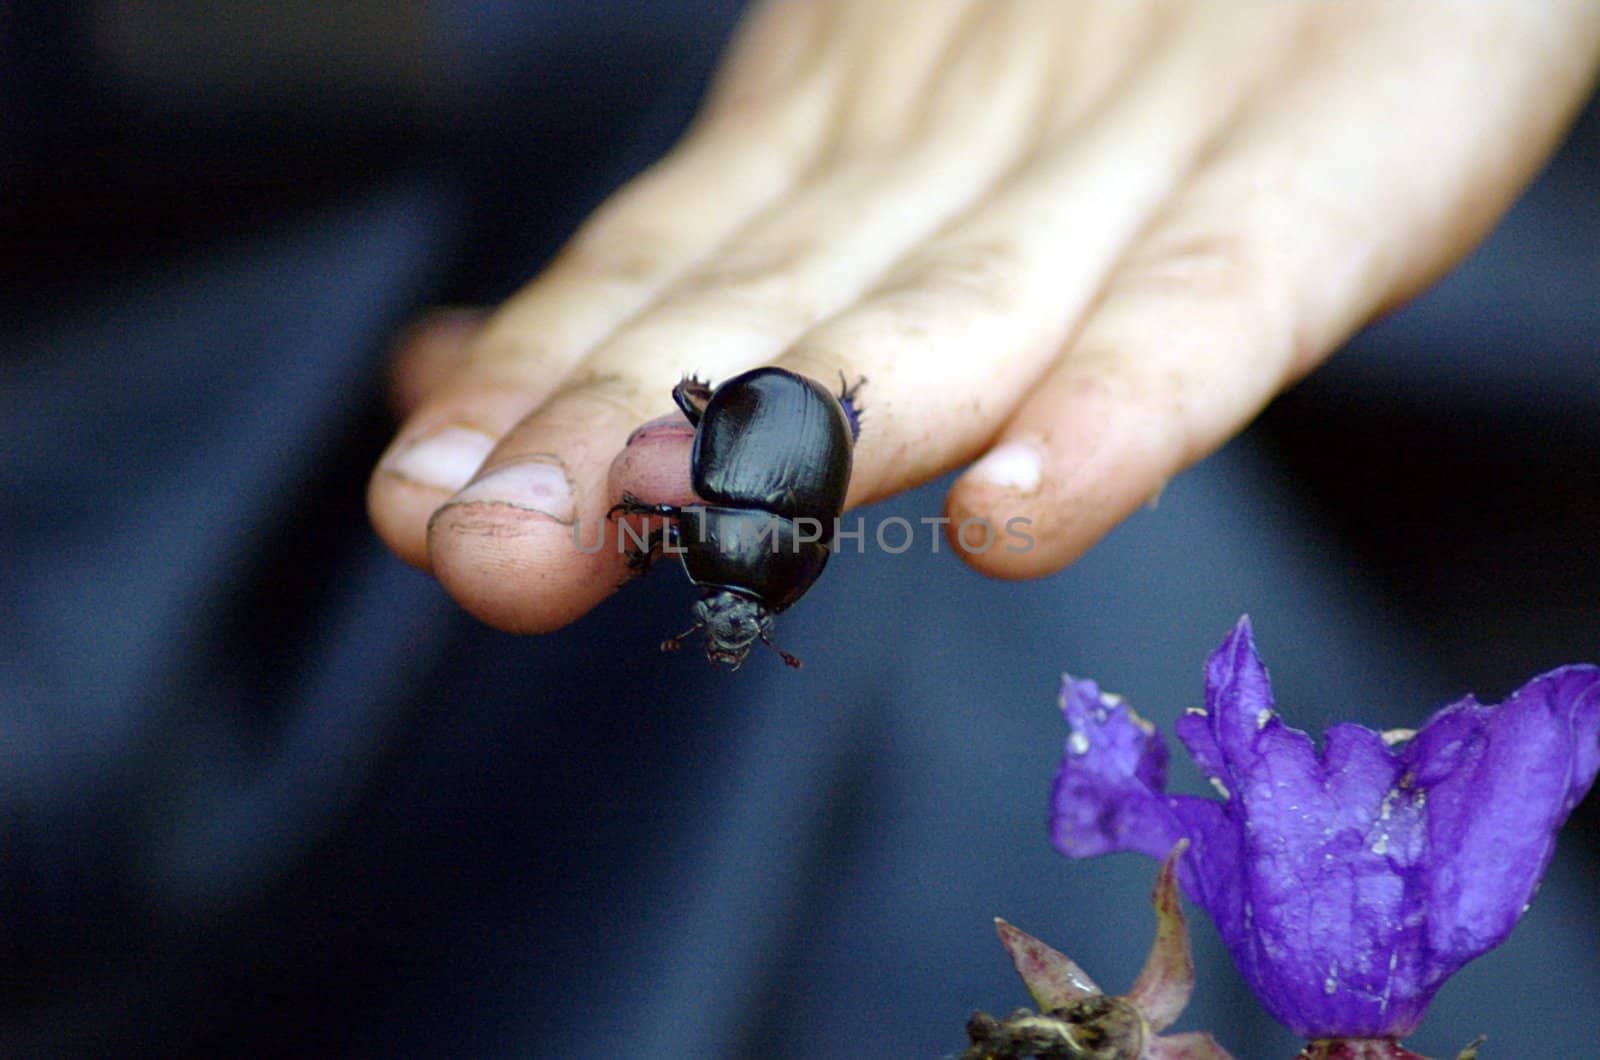 Black beetle crawling on a little boys hand